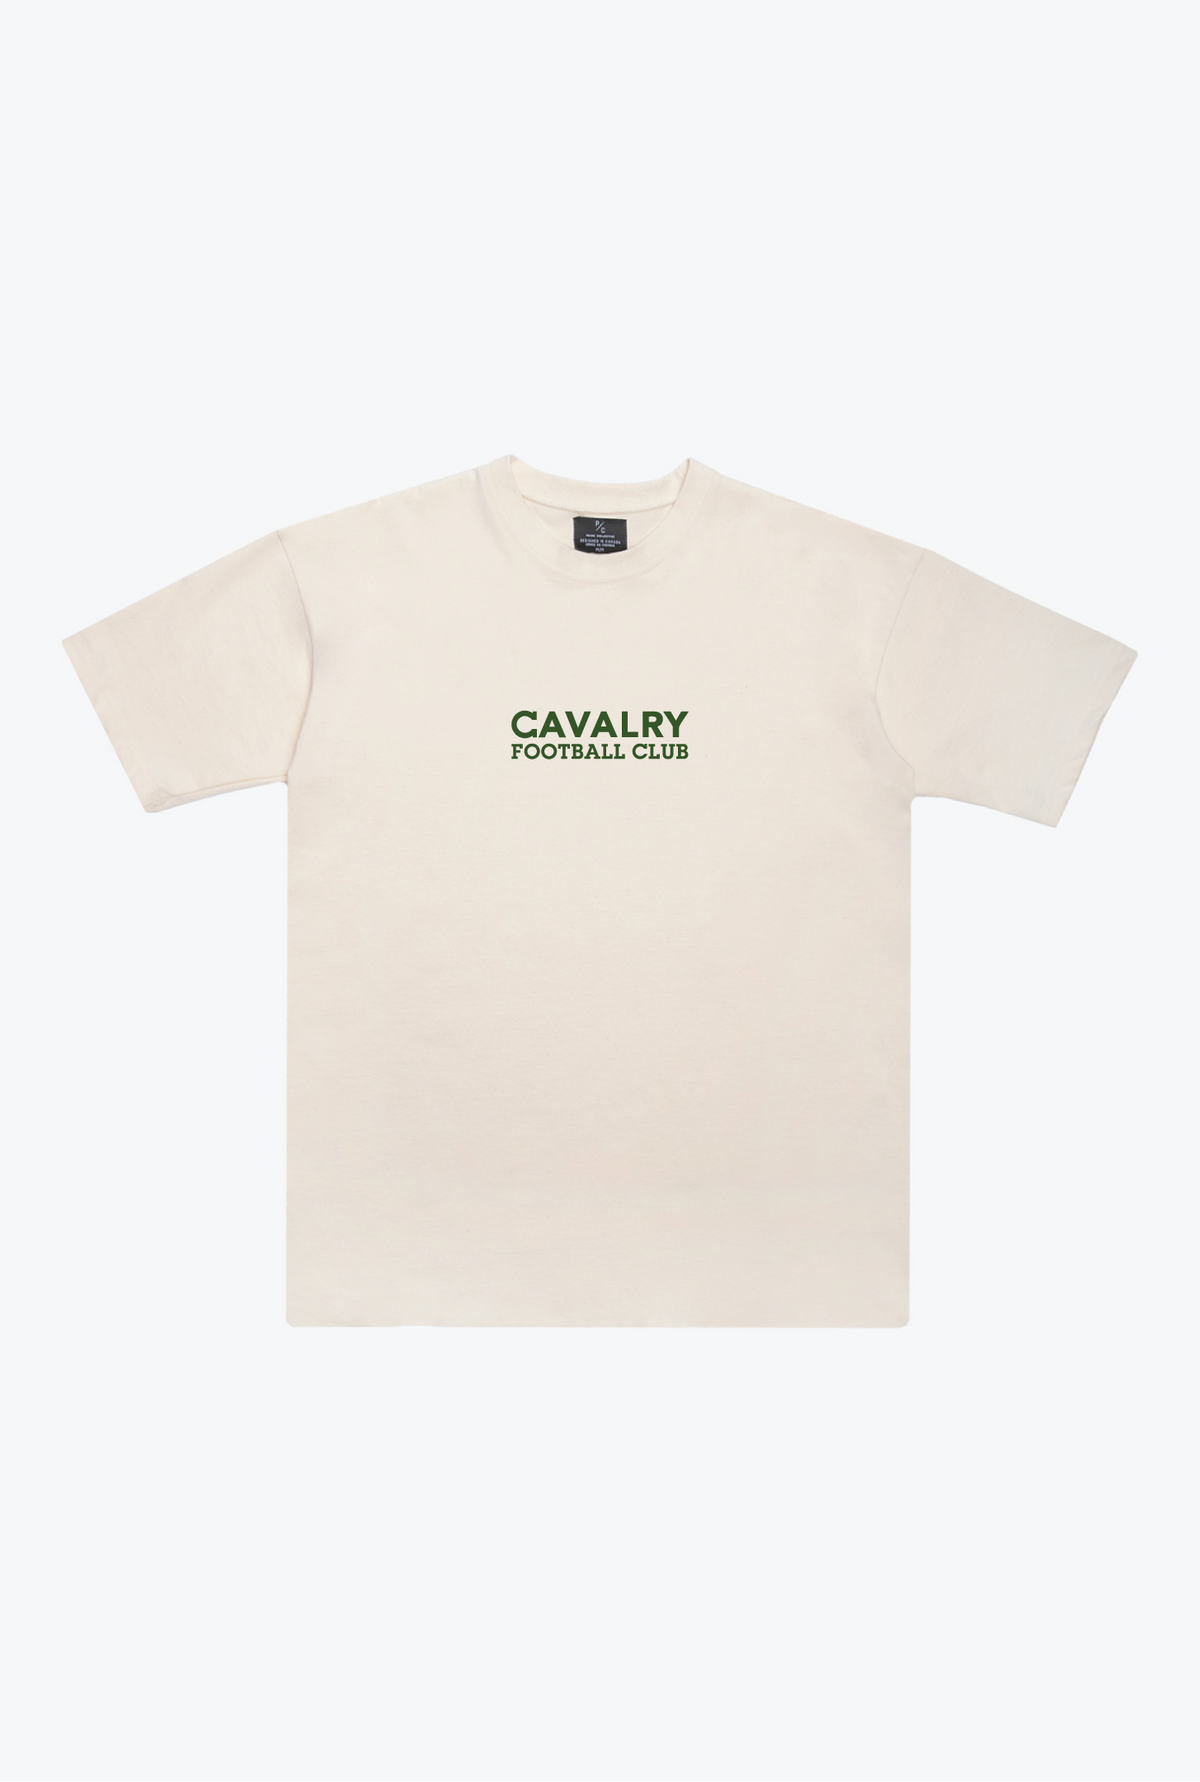 Cavalry FC Heavyweight T-Shirt - Ivory